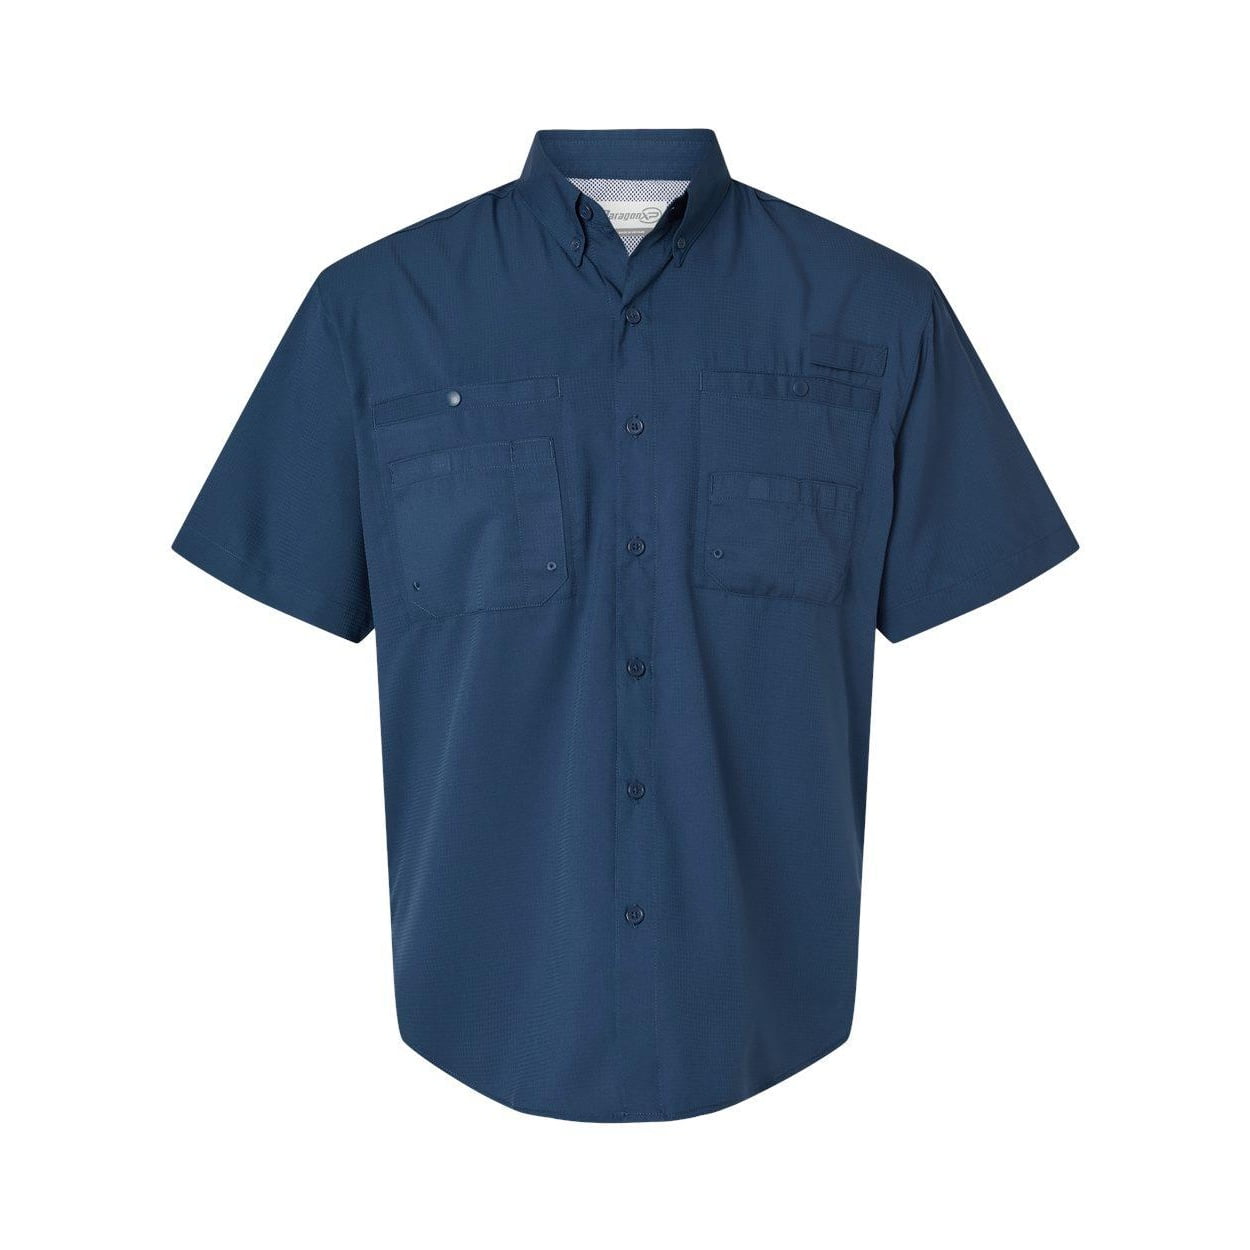 Paragon Hatteras Performance Short Sleeve Fishing Shirt - Walmart.com